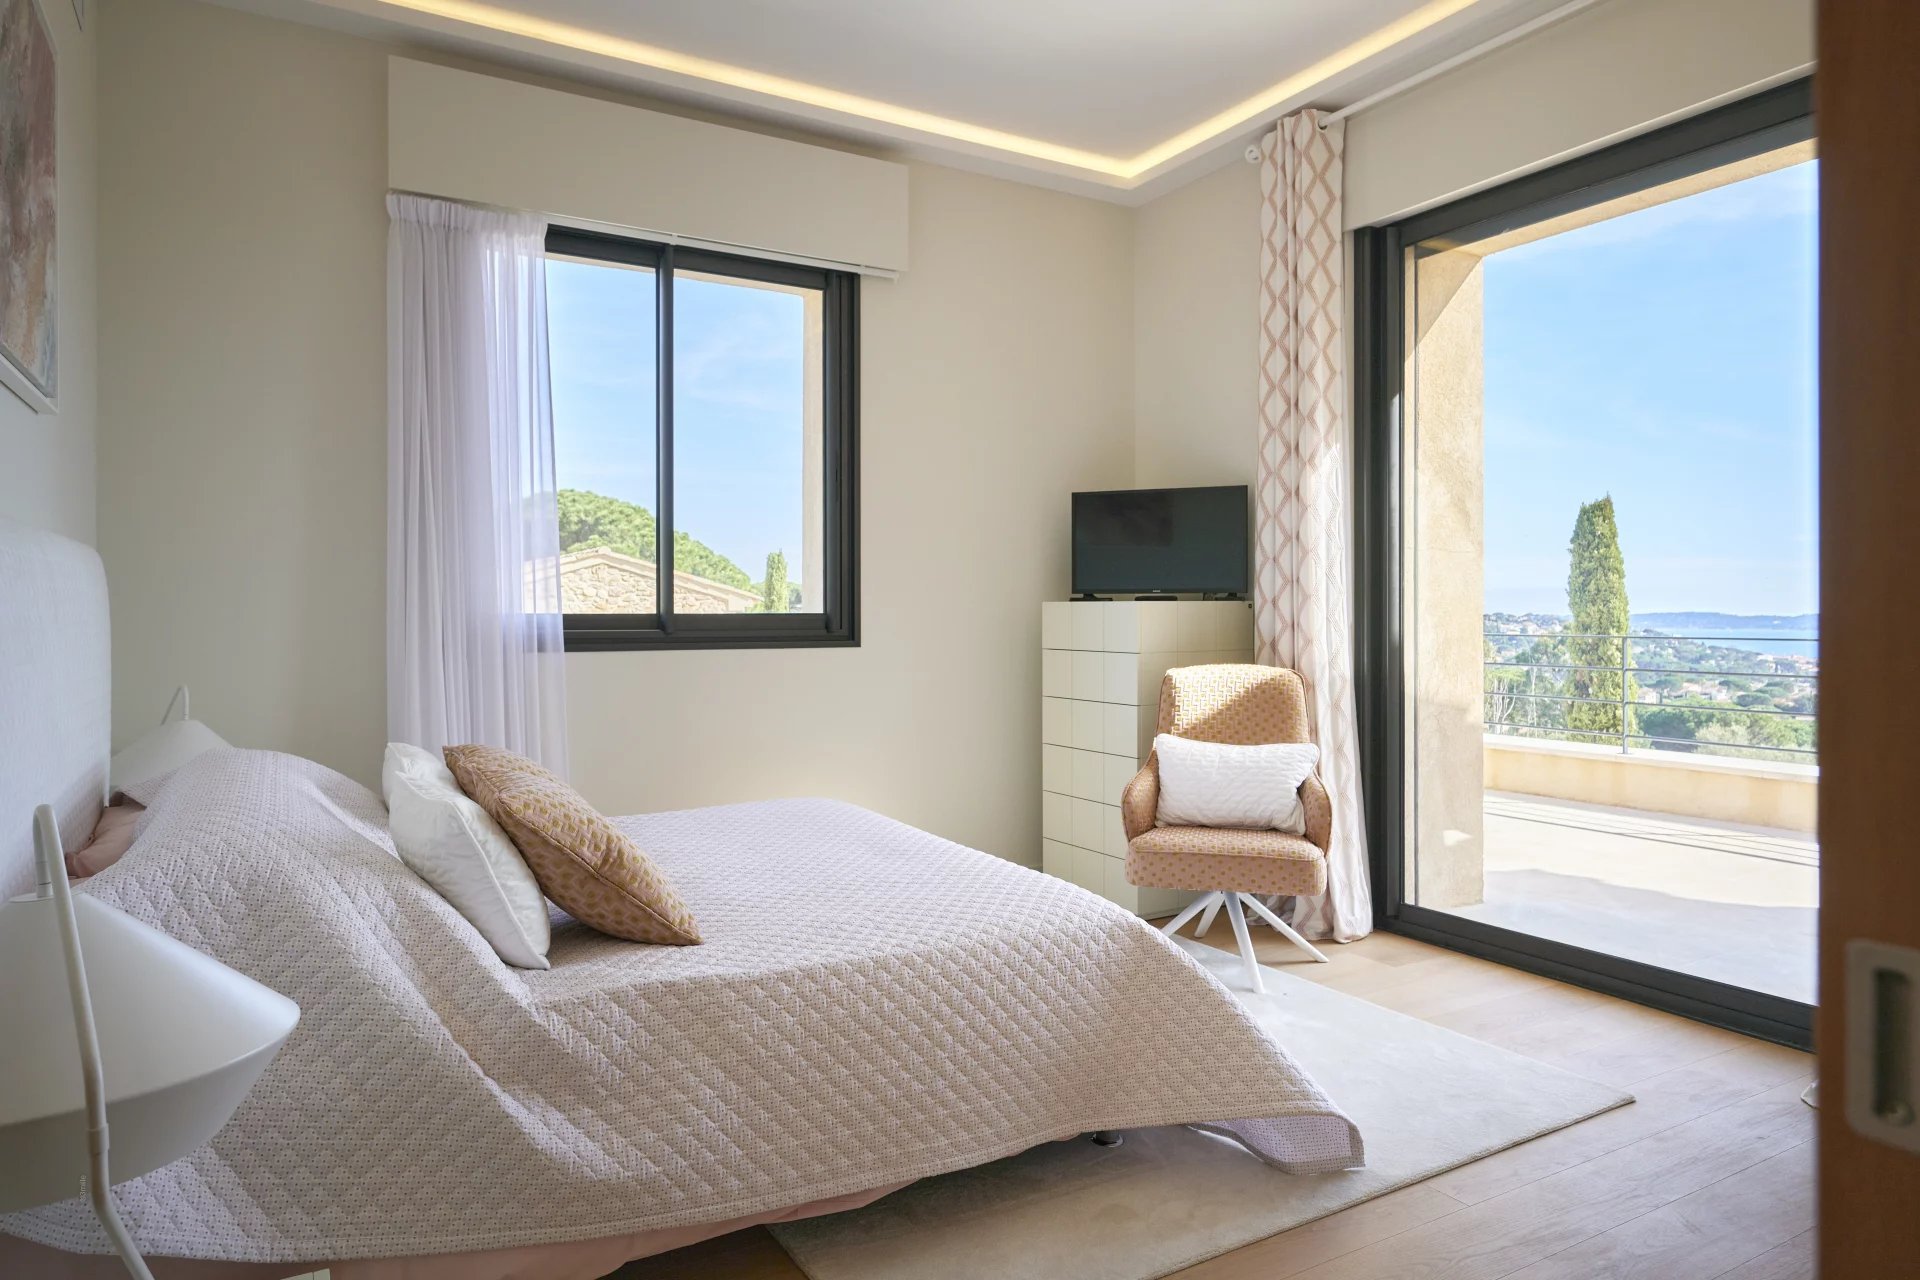 Francis York Luxury Villa Overlooking the Bay of Saint Tropez, French Riviera 11.jpg